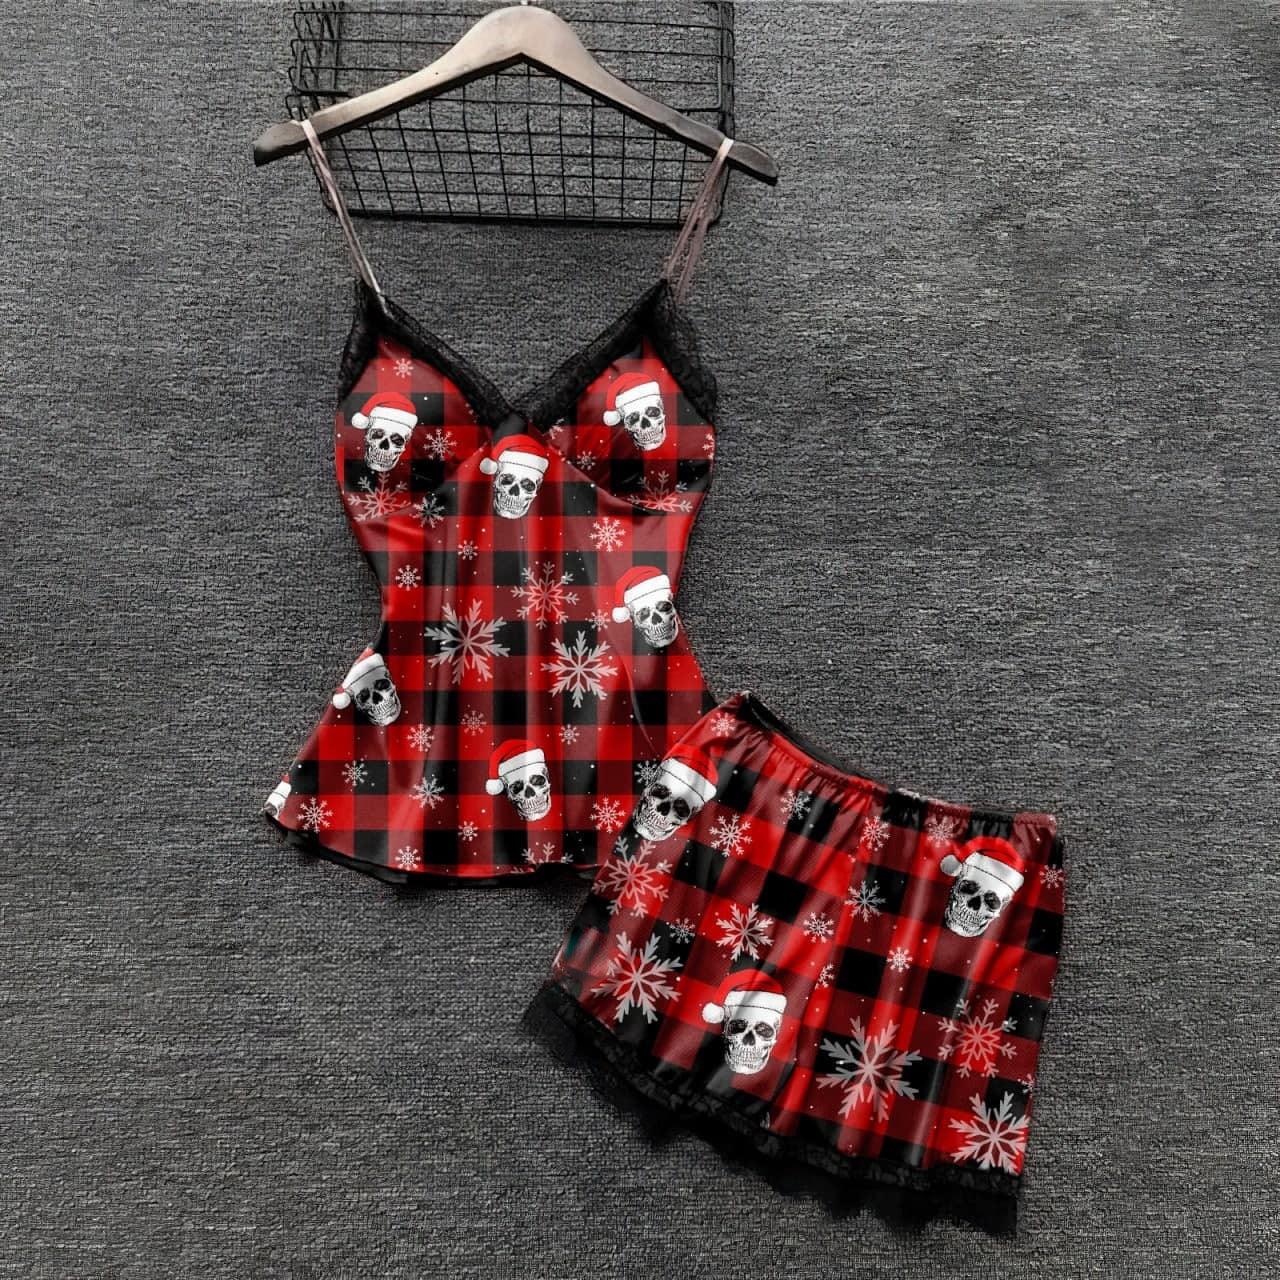 Gothic Skull Red Checked Pajama Set, Cute Christmas Nightwear 4 Piece For Women - Wonder Skull